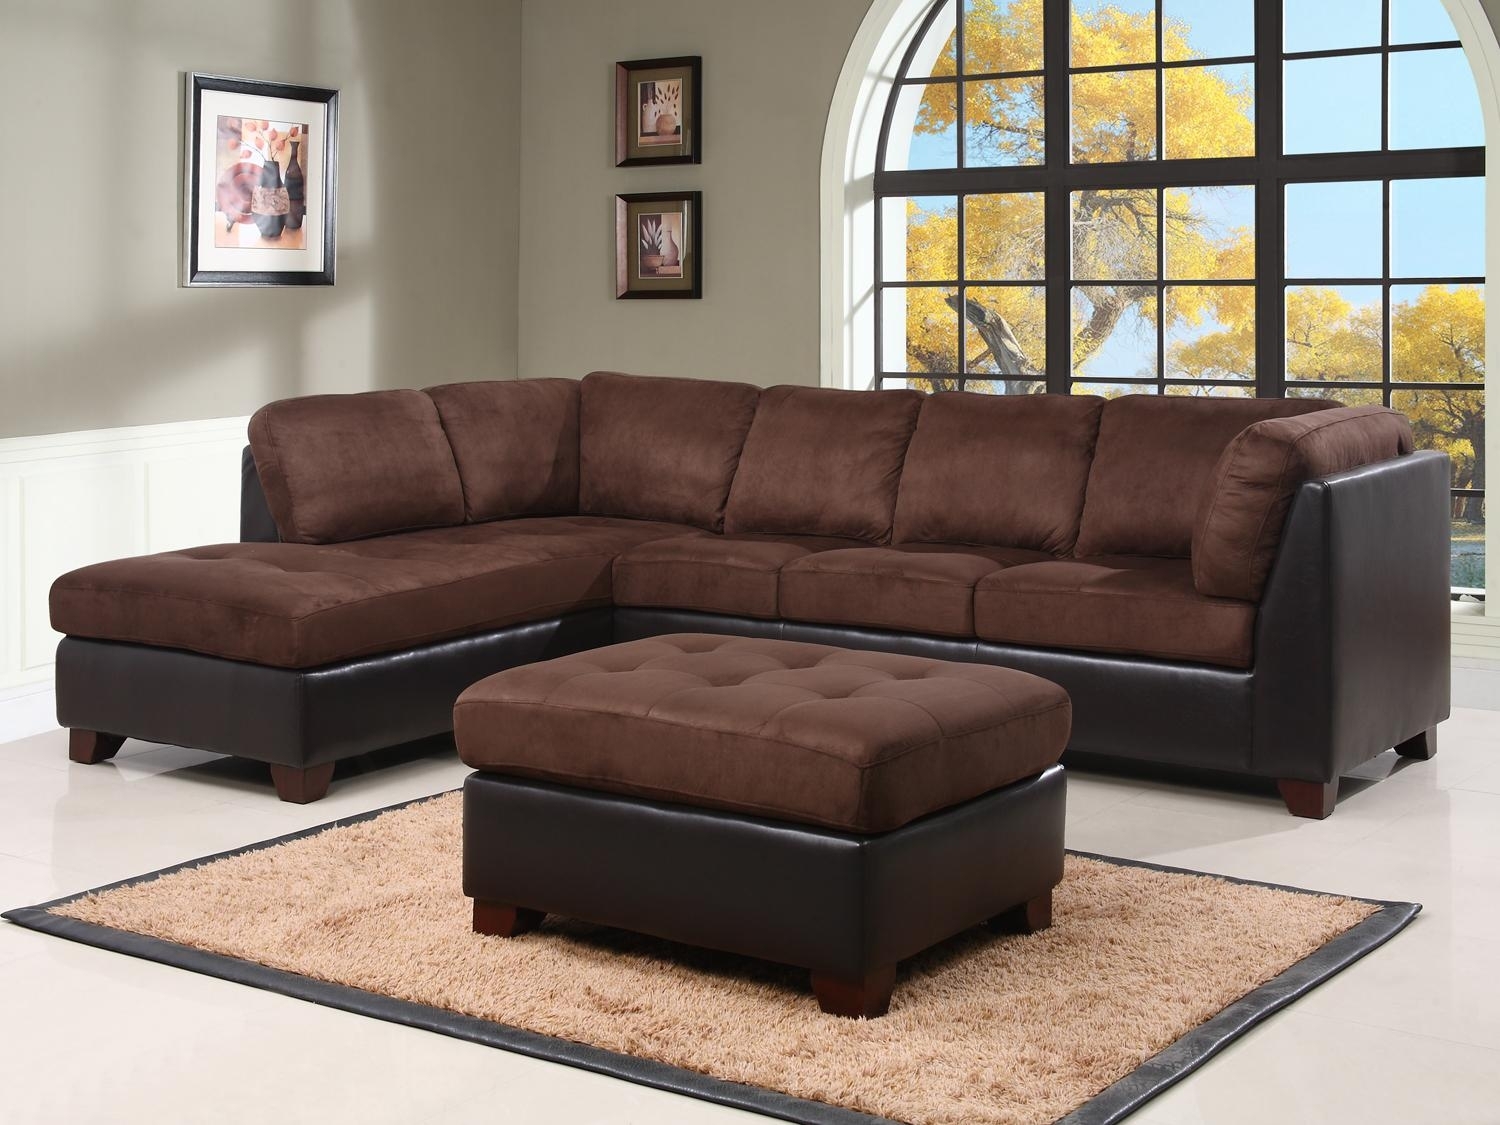 Charlotte dark brown sectional sofa and ottoman